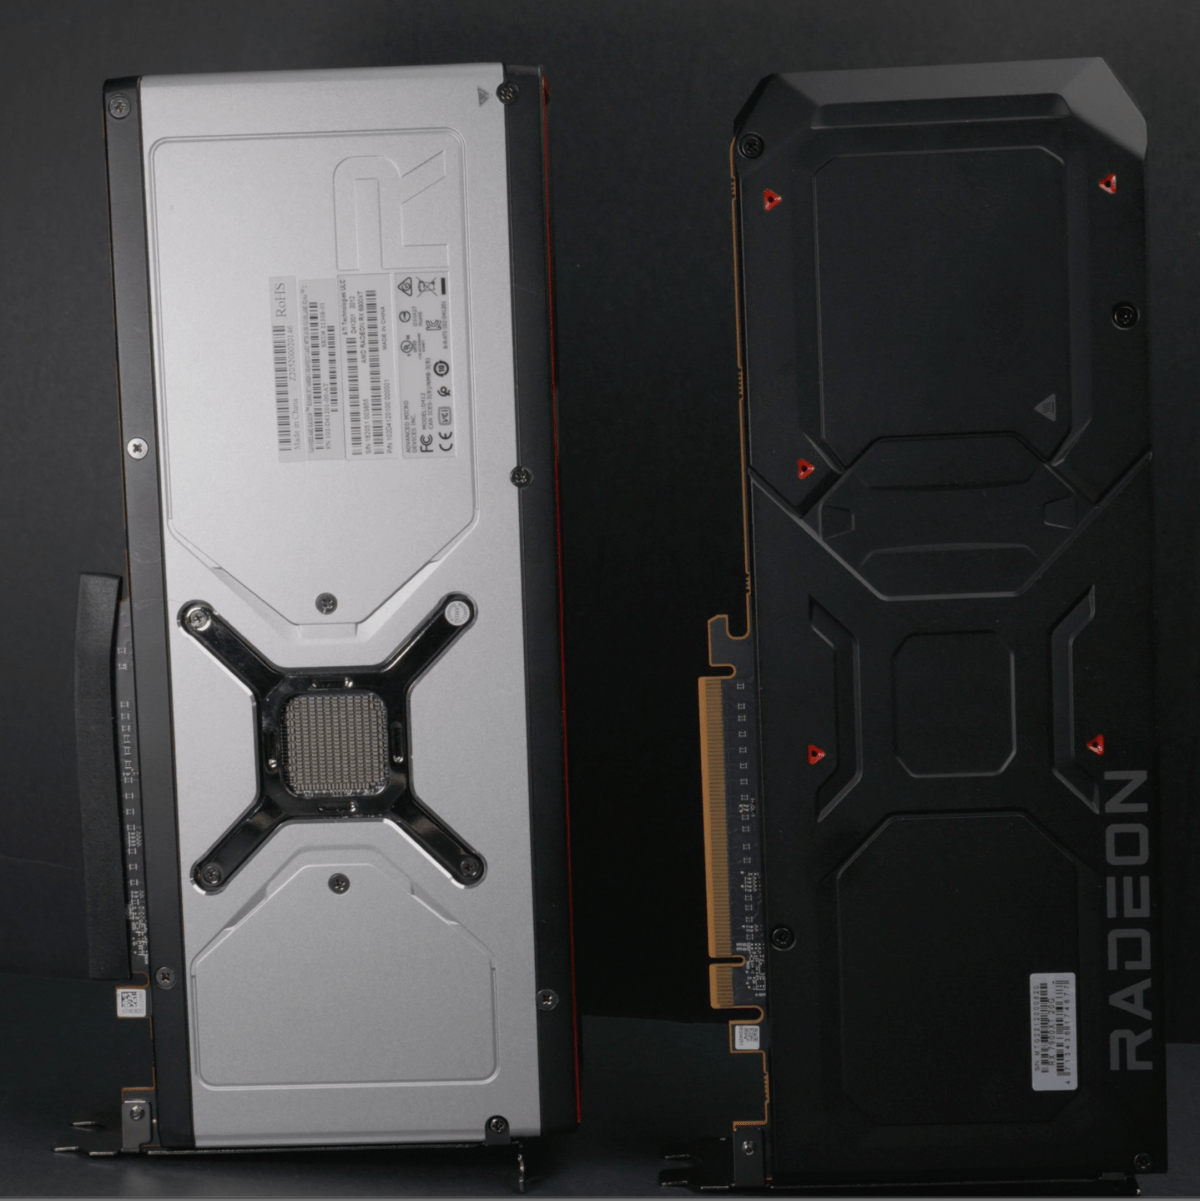 AMD 6900 XT vs AMD 7900 XTX